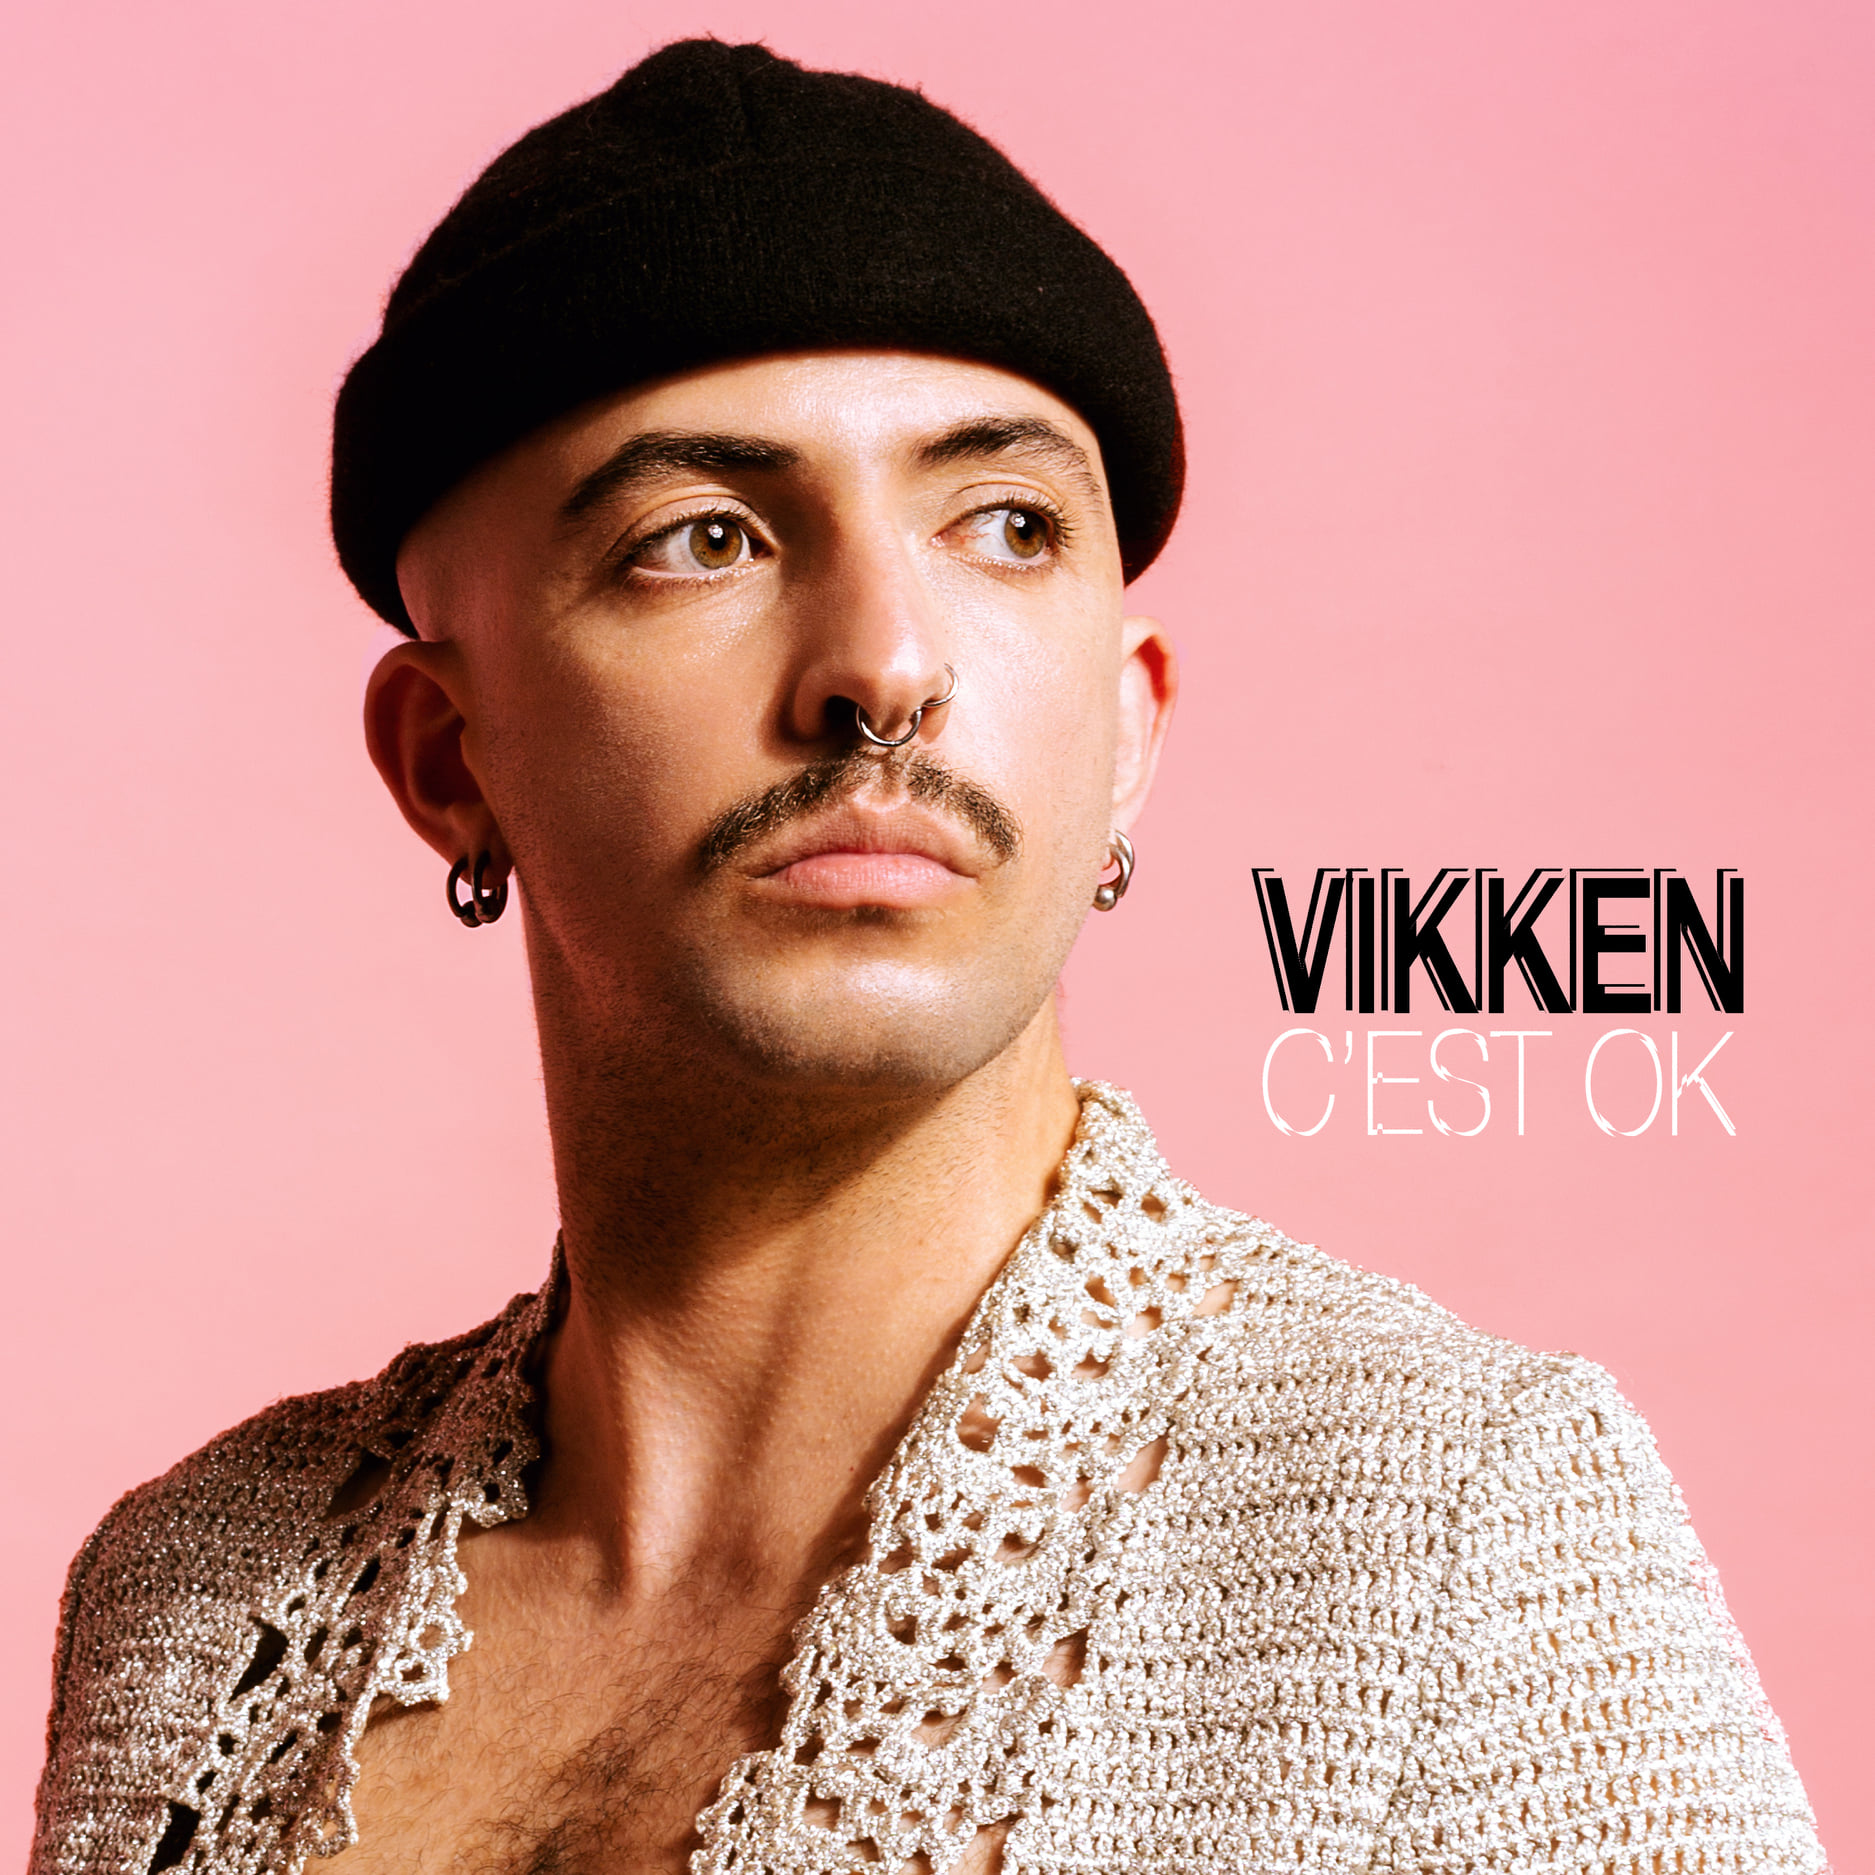 Cover de "C'est OK", de Vikken